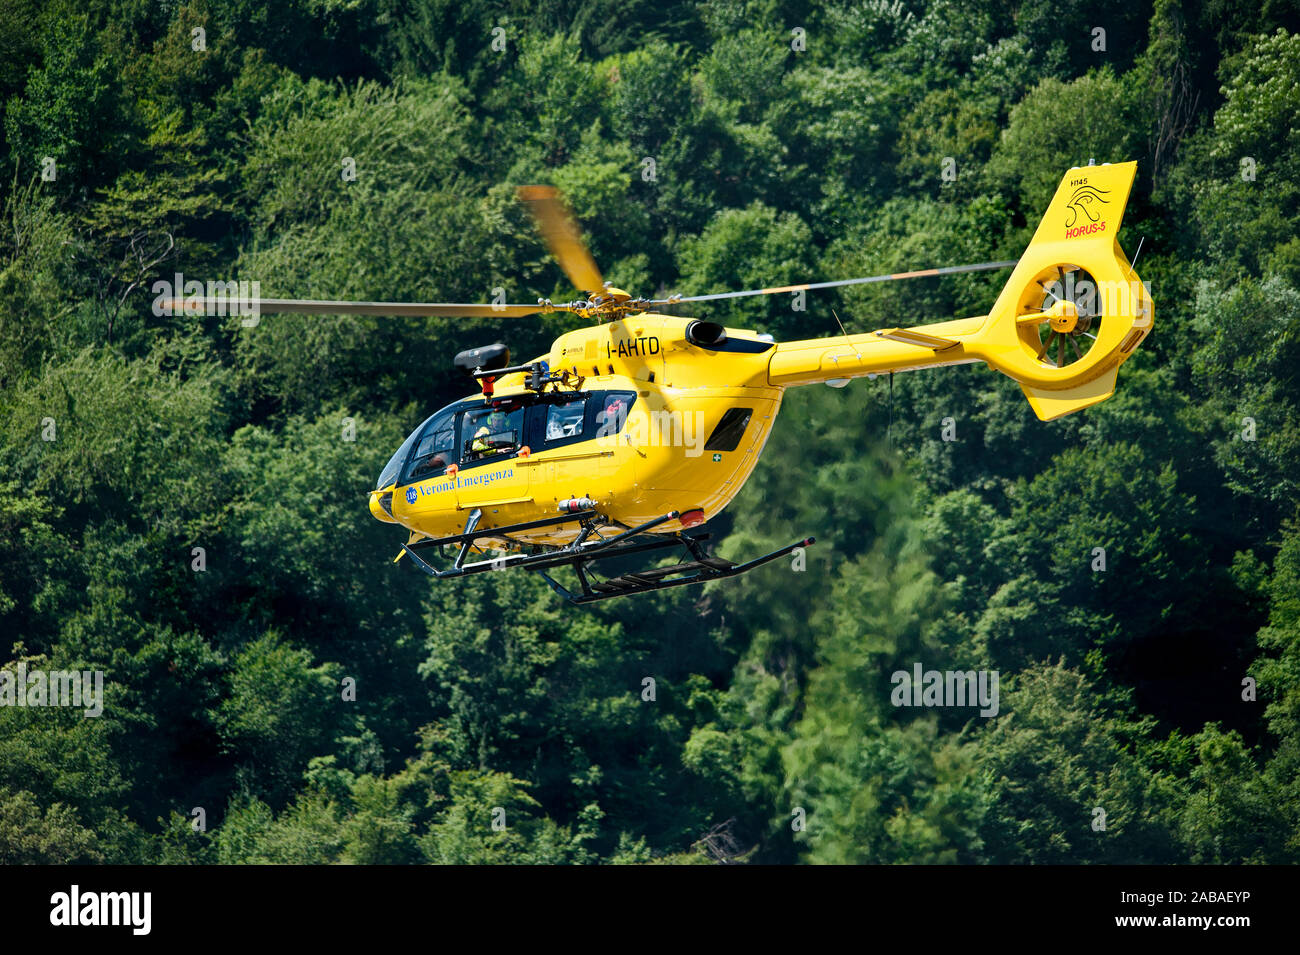 16/07/2019 Valdagno (VI) Italy: yellow Italian rescue helicopter in flight Stock Photo